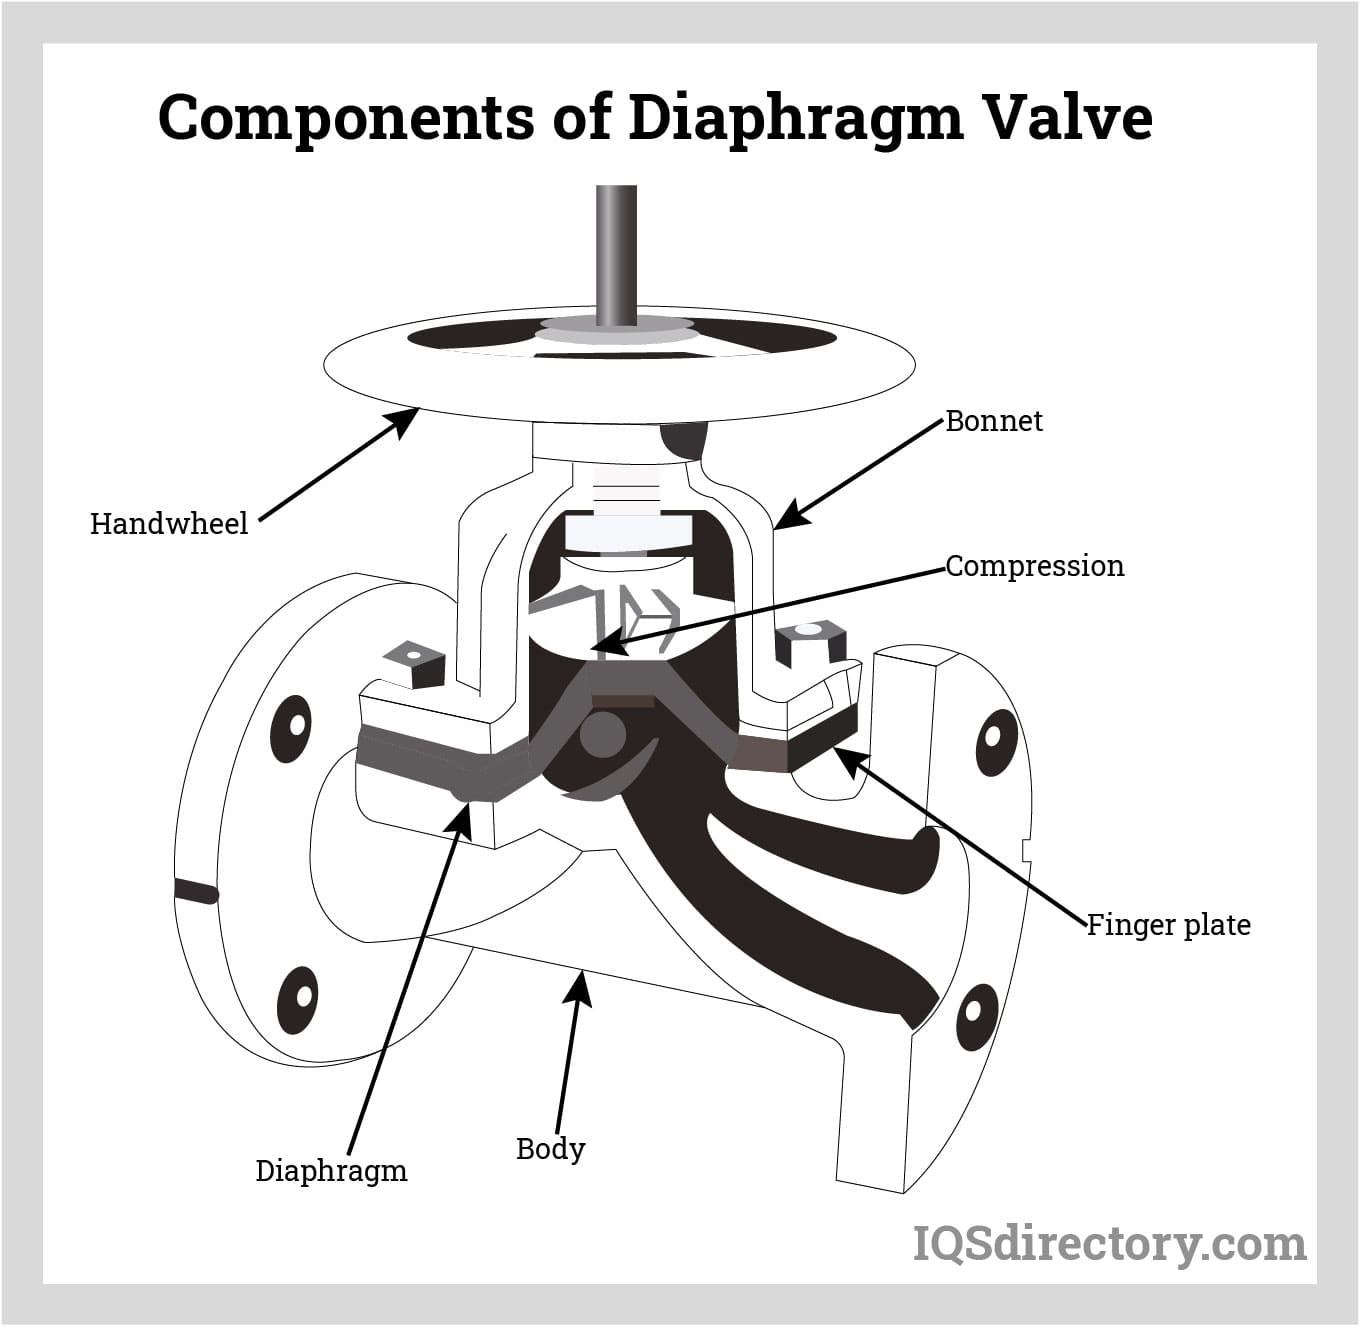 Components of Diaphragm Valve